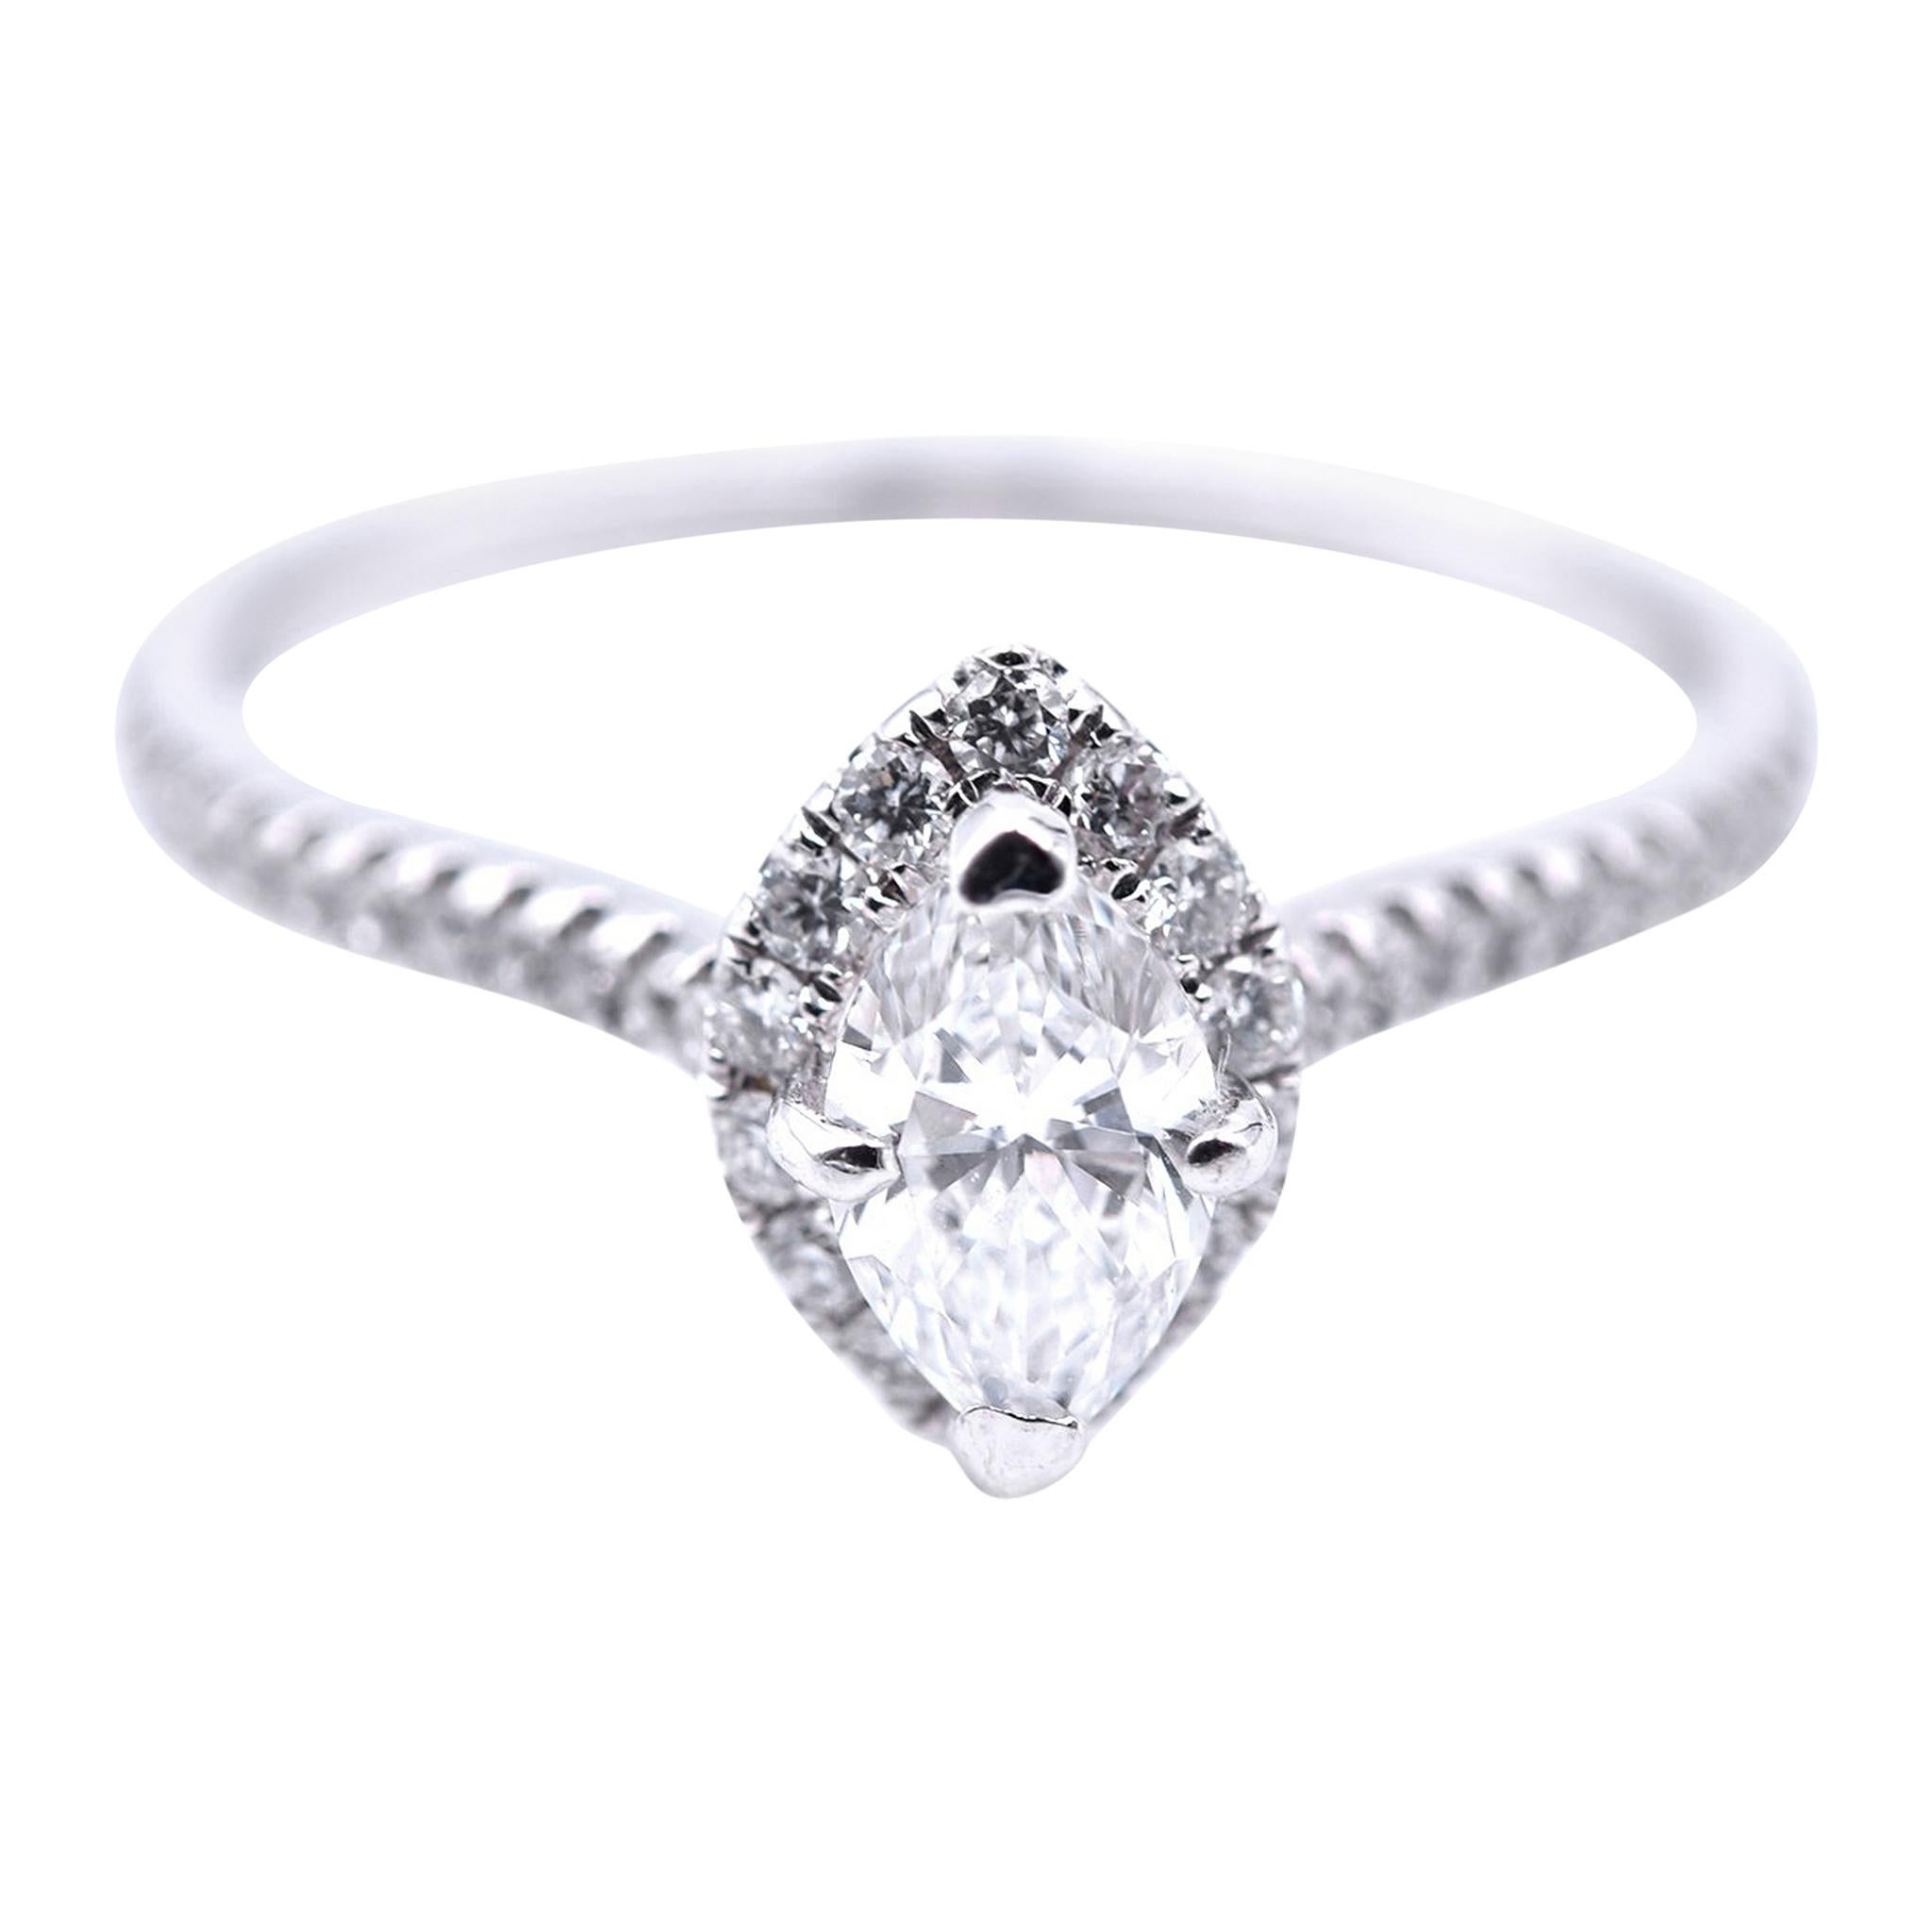 14 Karat White Gold Marquise Diamond Engagement Ring